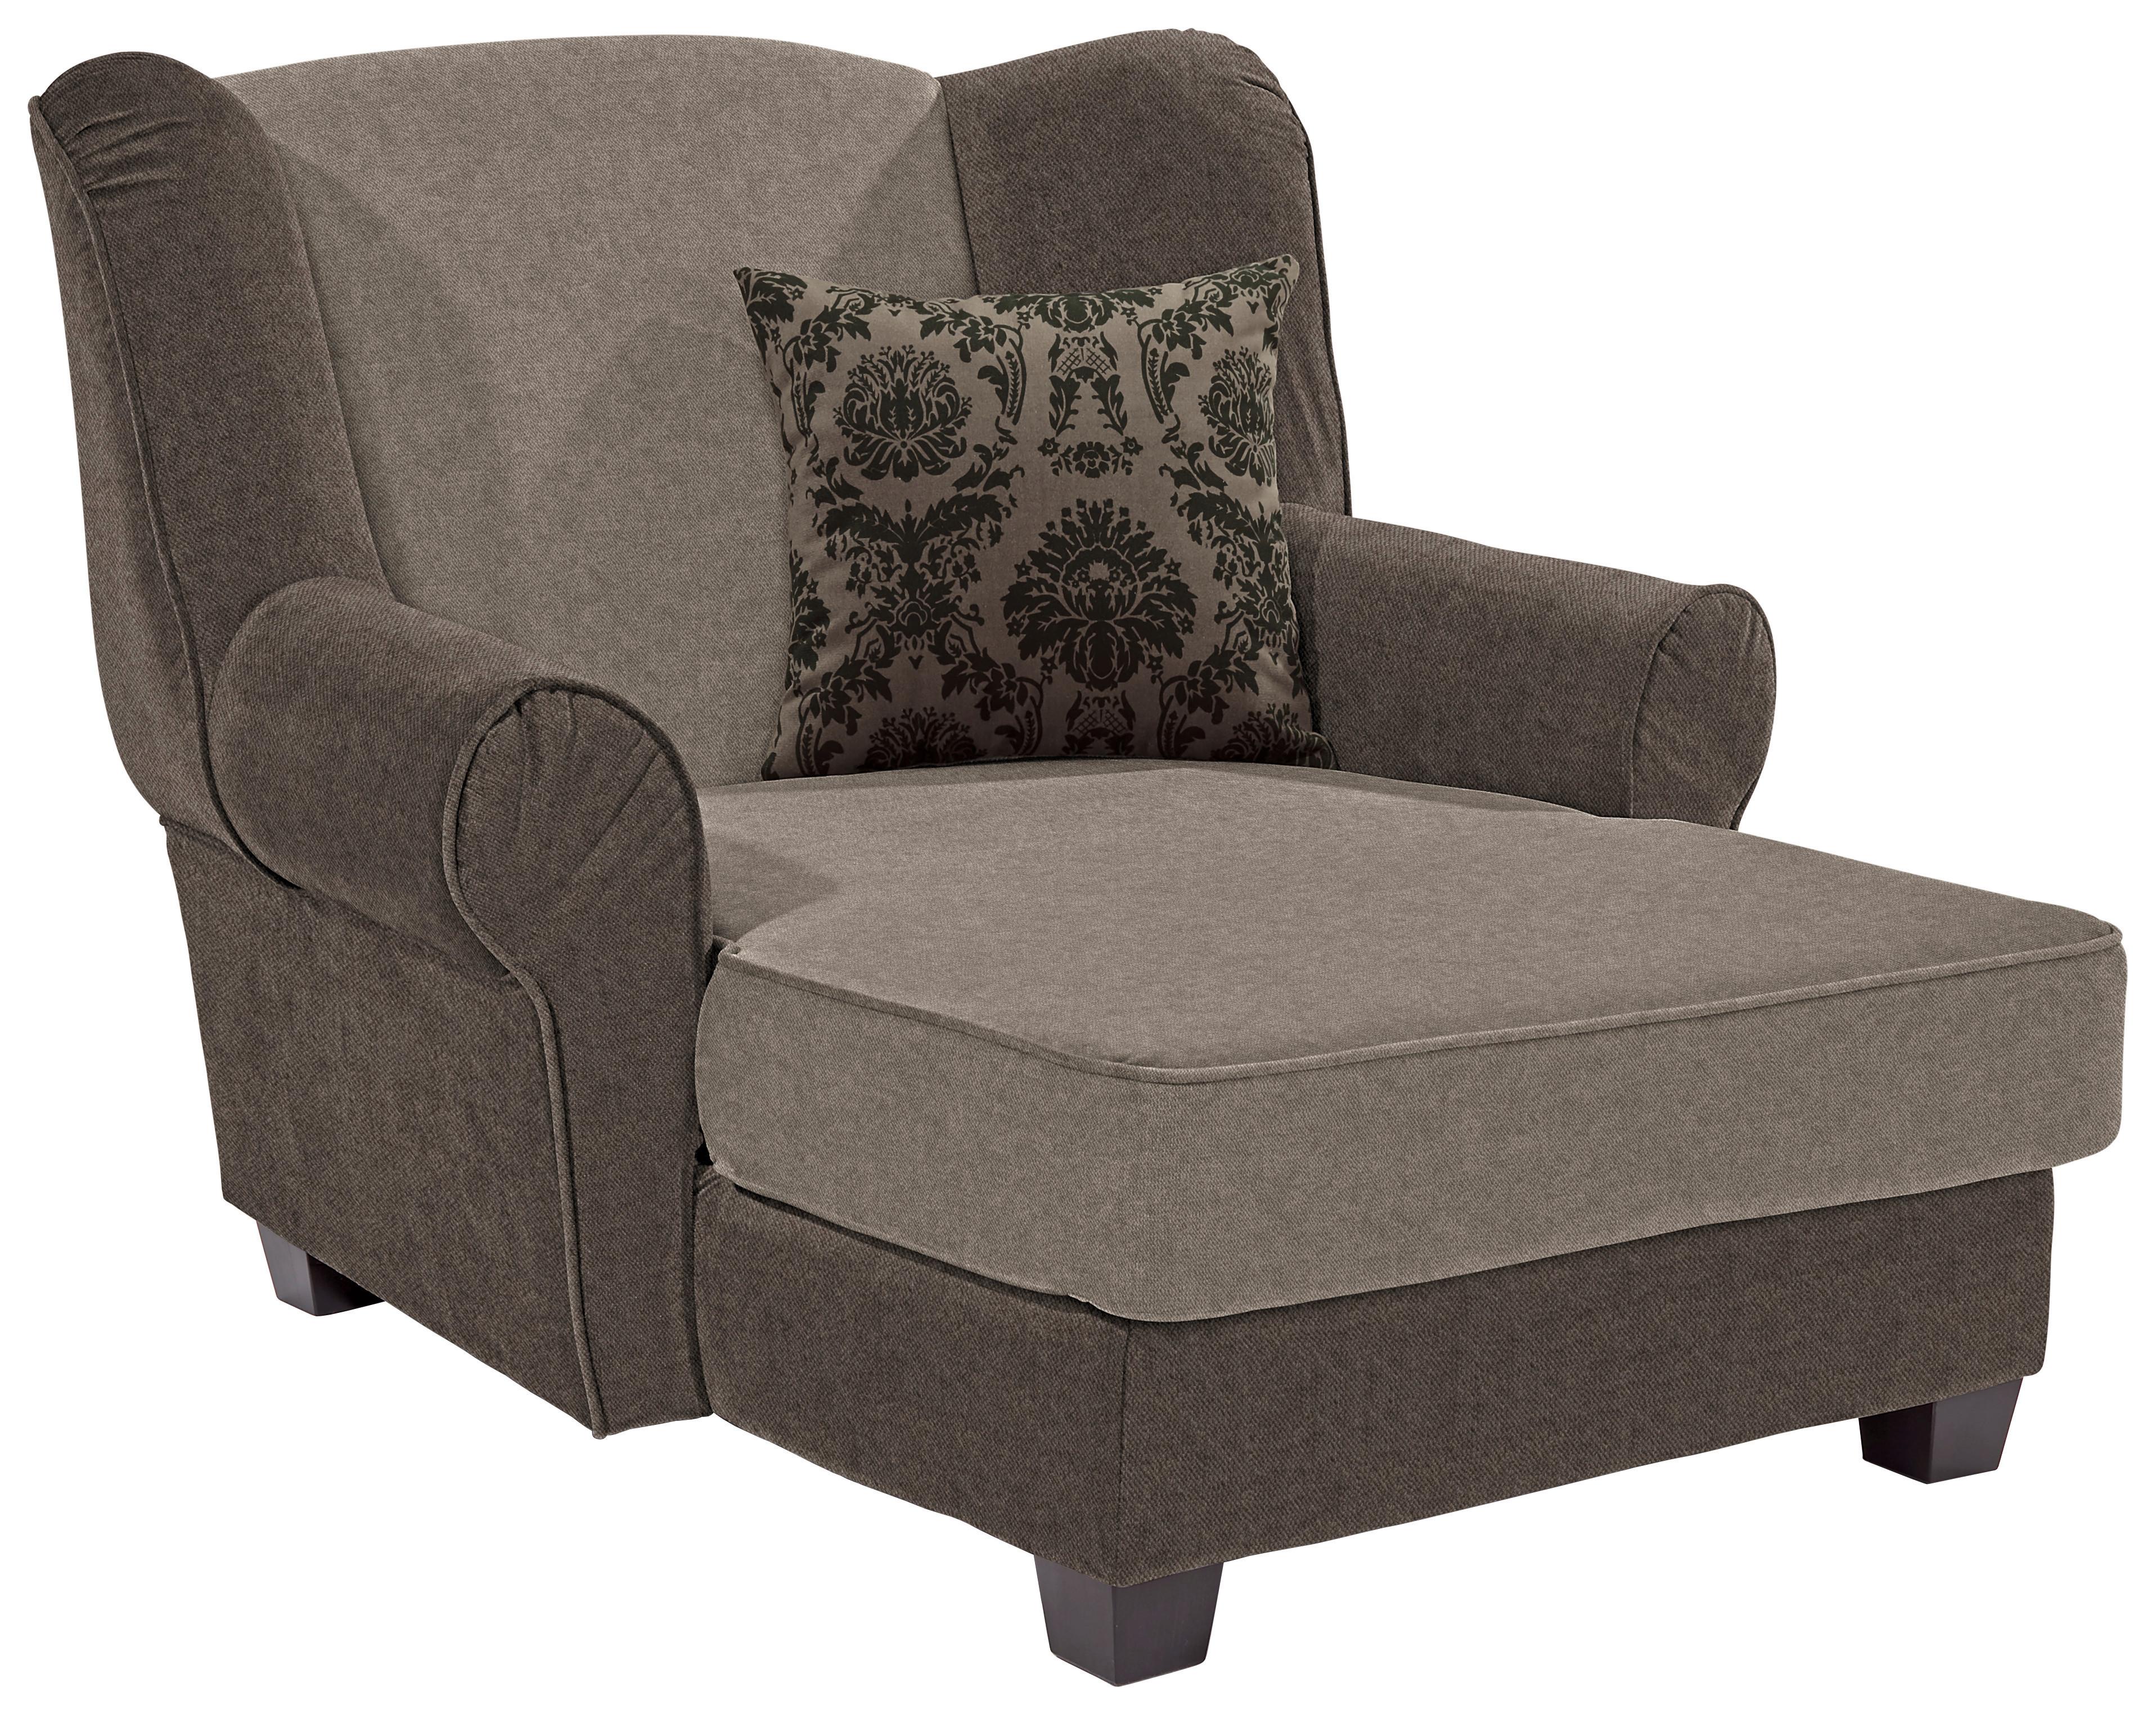 Fotelja Living - tamno smeđa/svijetlo smeđa, Romantik / Landhaus, drvo/tekstil (120/98/138cm) - Modern Living